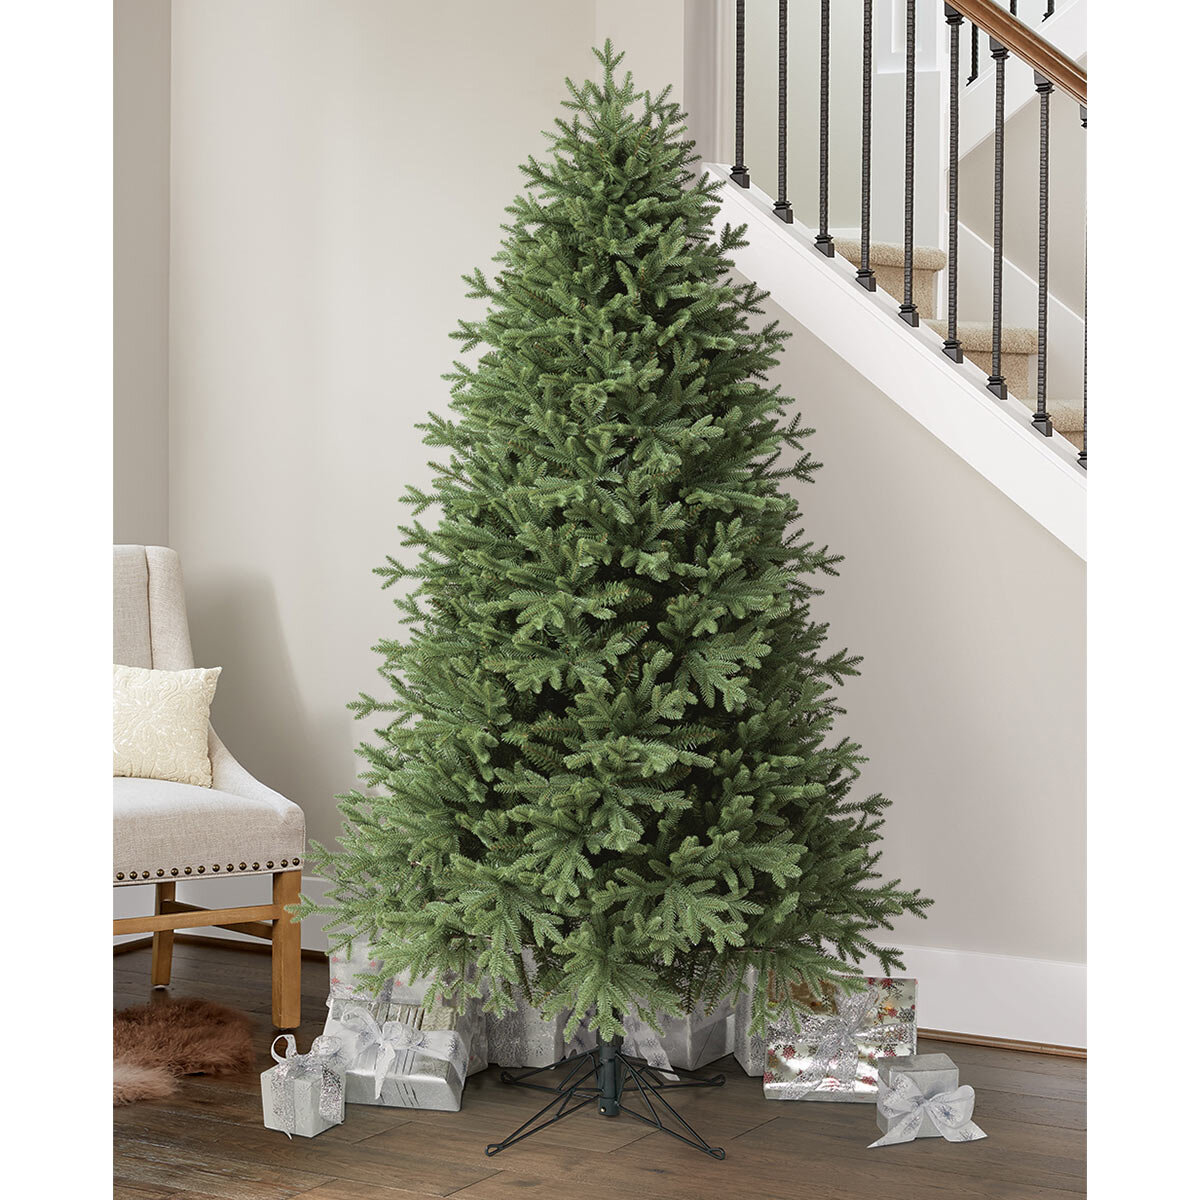 Buy 6.5' Un-Lit Aspen Tree Lifestyle Image at Costco.co.uk